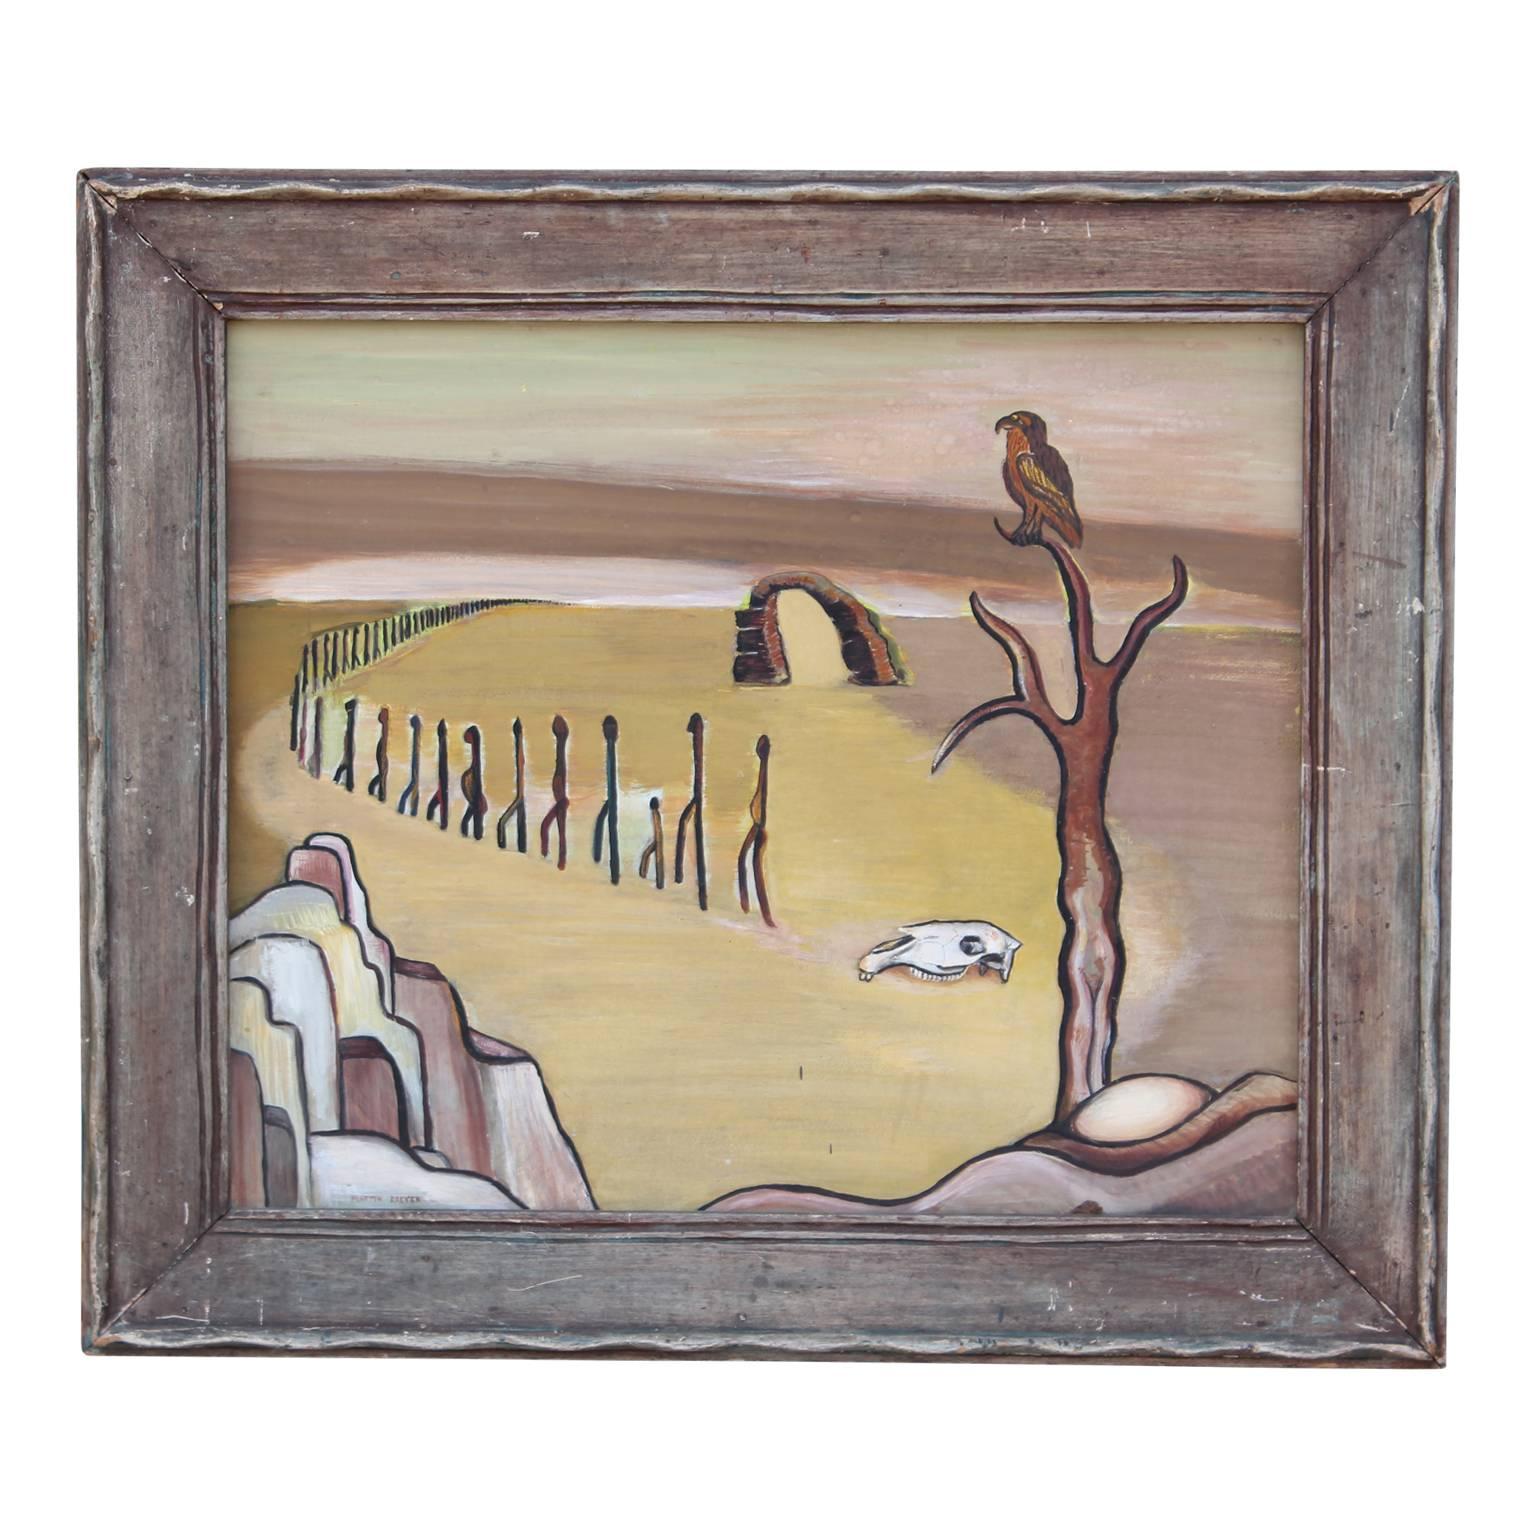 "The Long Road", Surreal Desert Landscape Painting